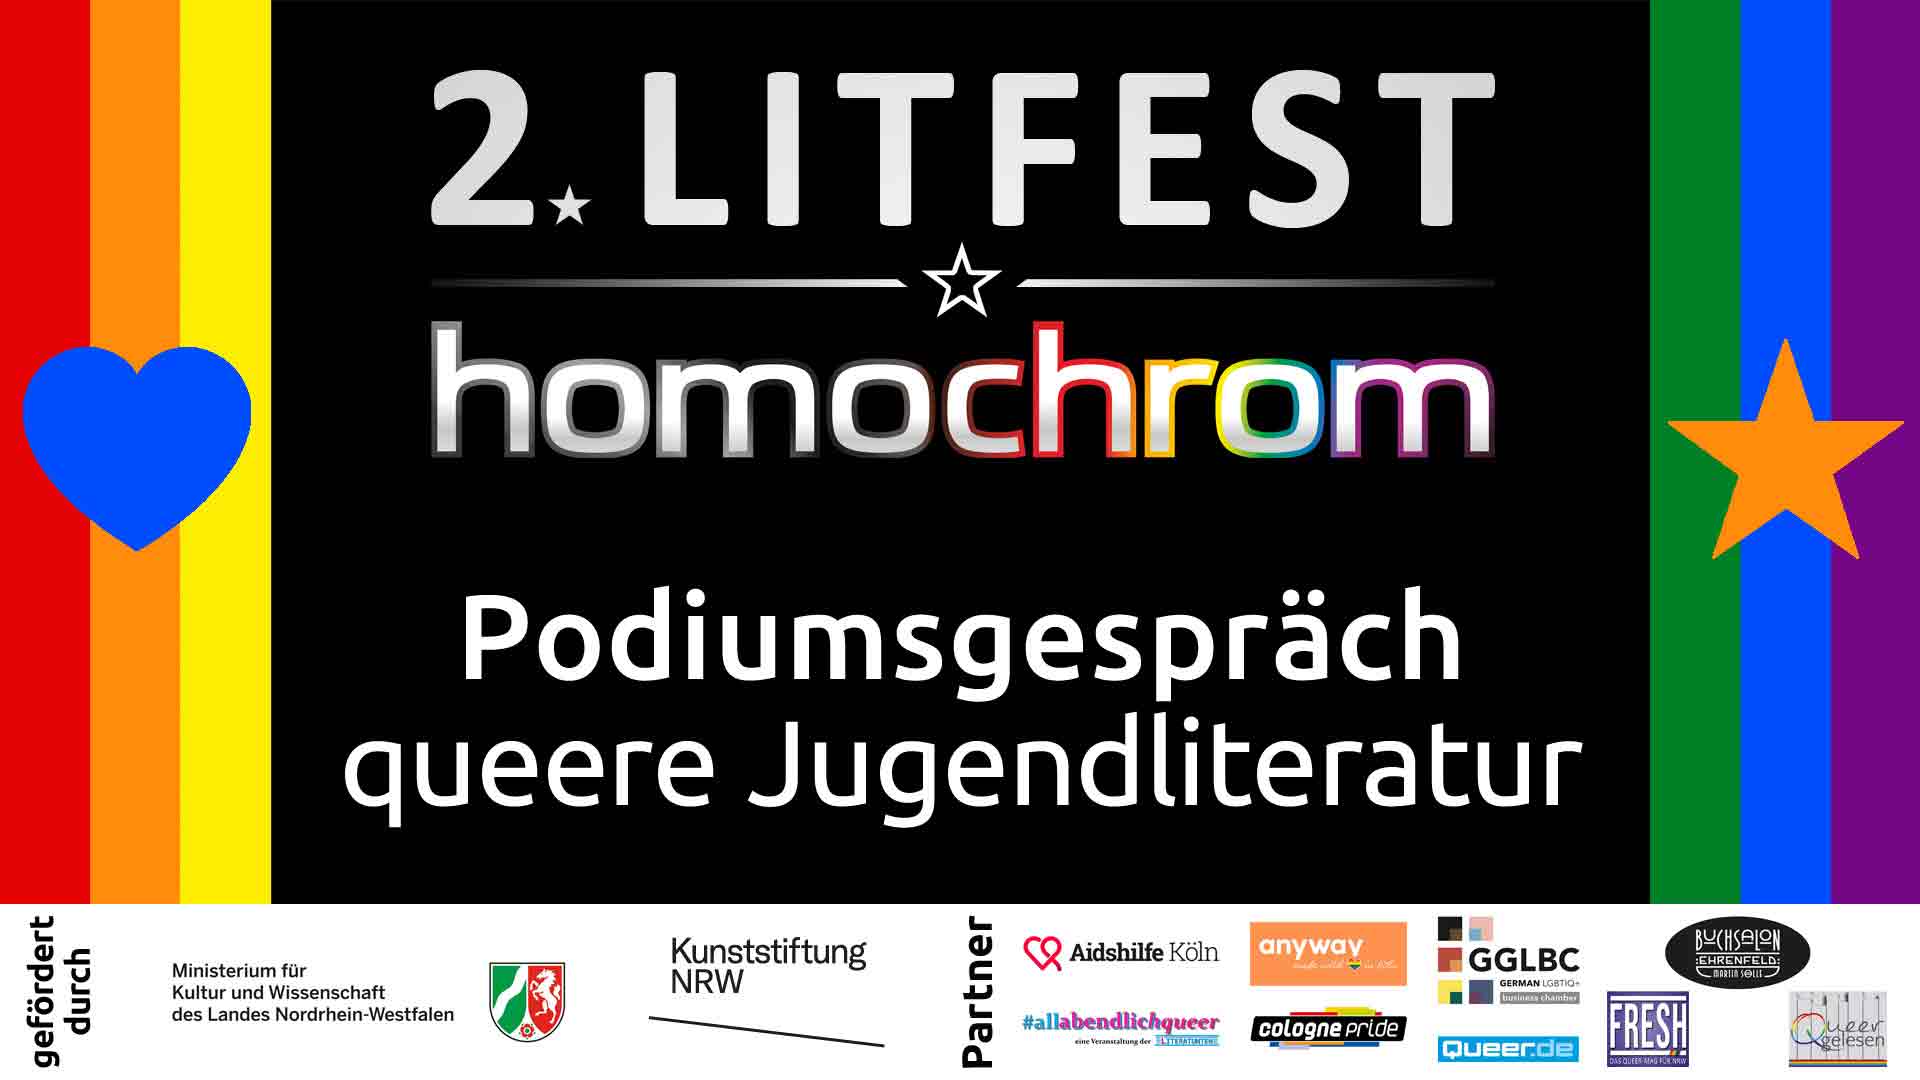  Youtube Video, Podiumsgespräch queere Jugend-Literatur, 2. Litfest homochrom